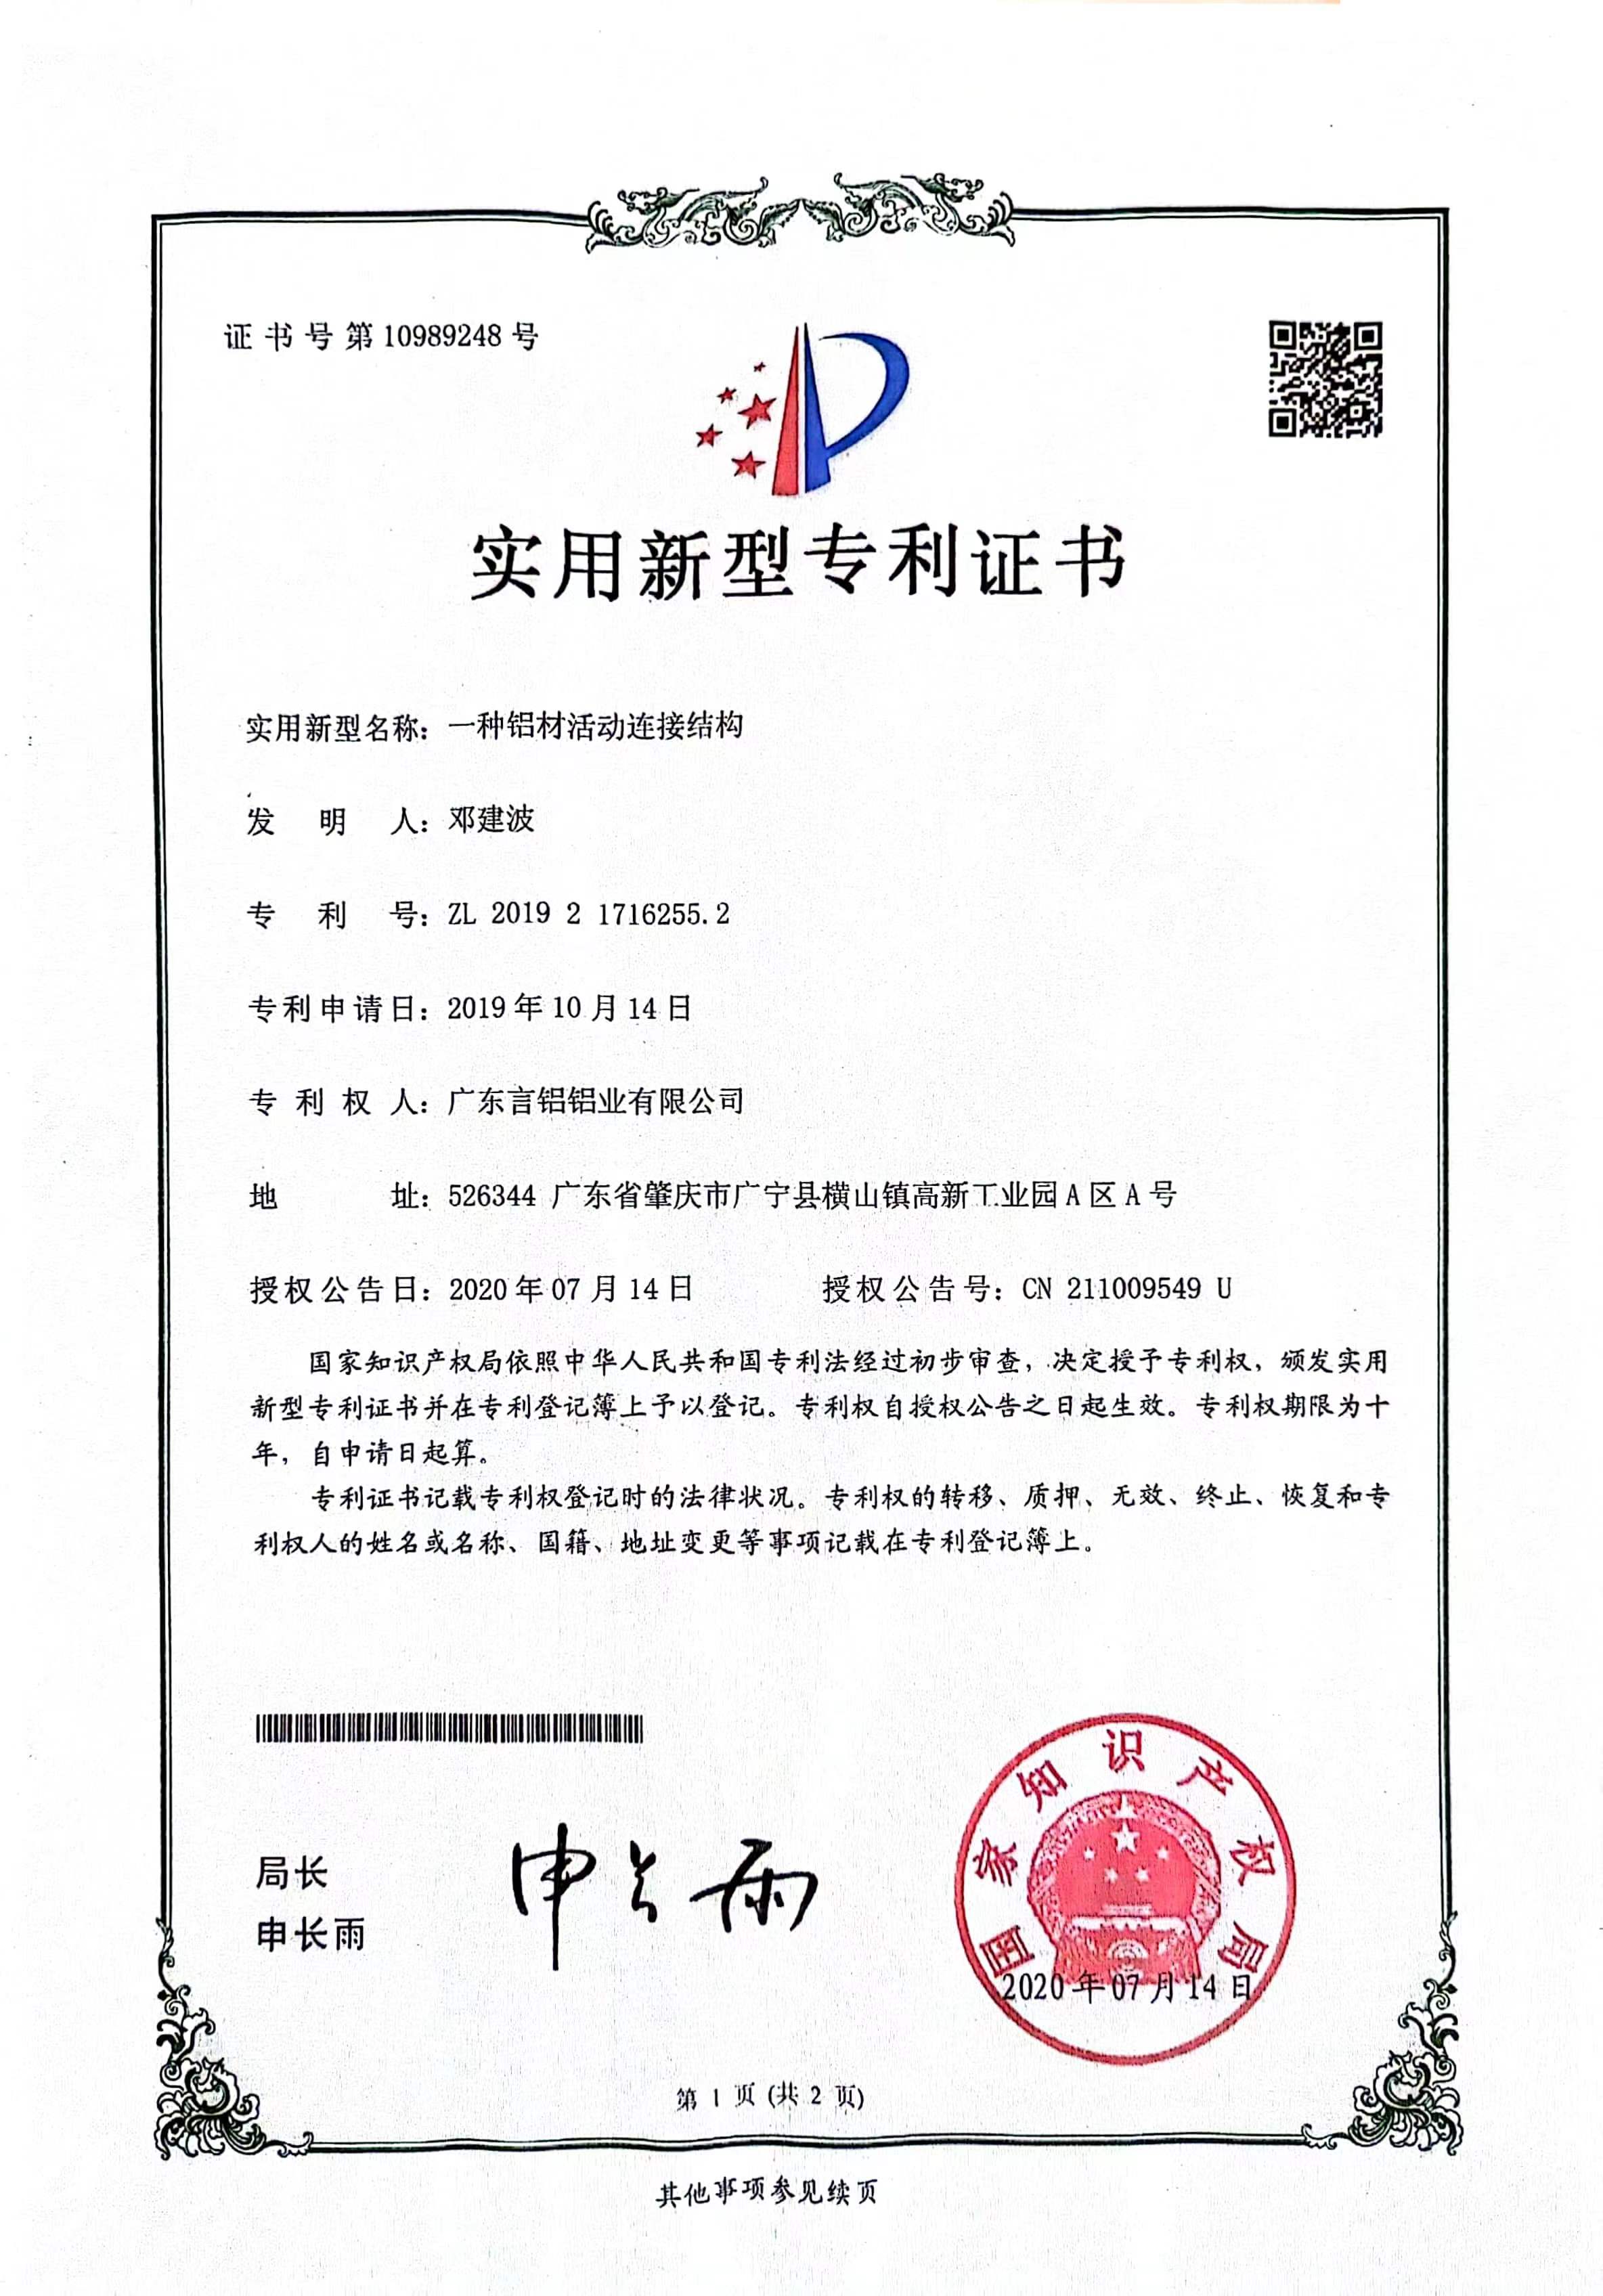 Patent certificate 5.jpg